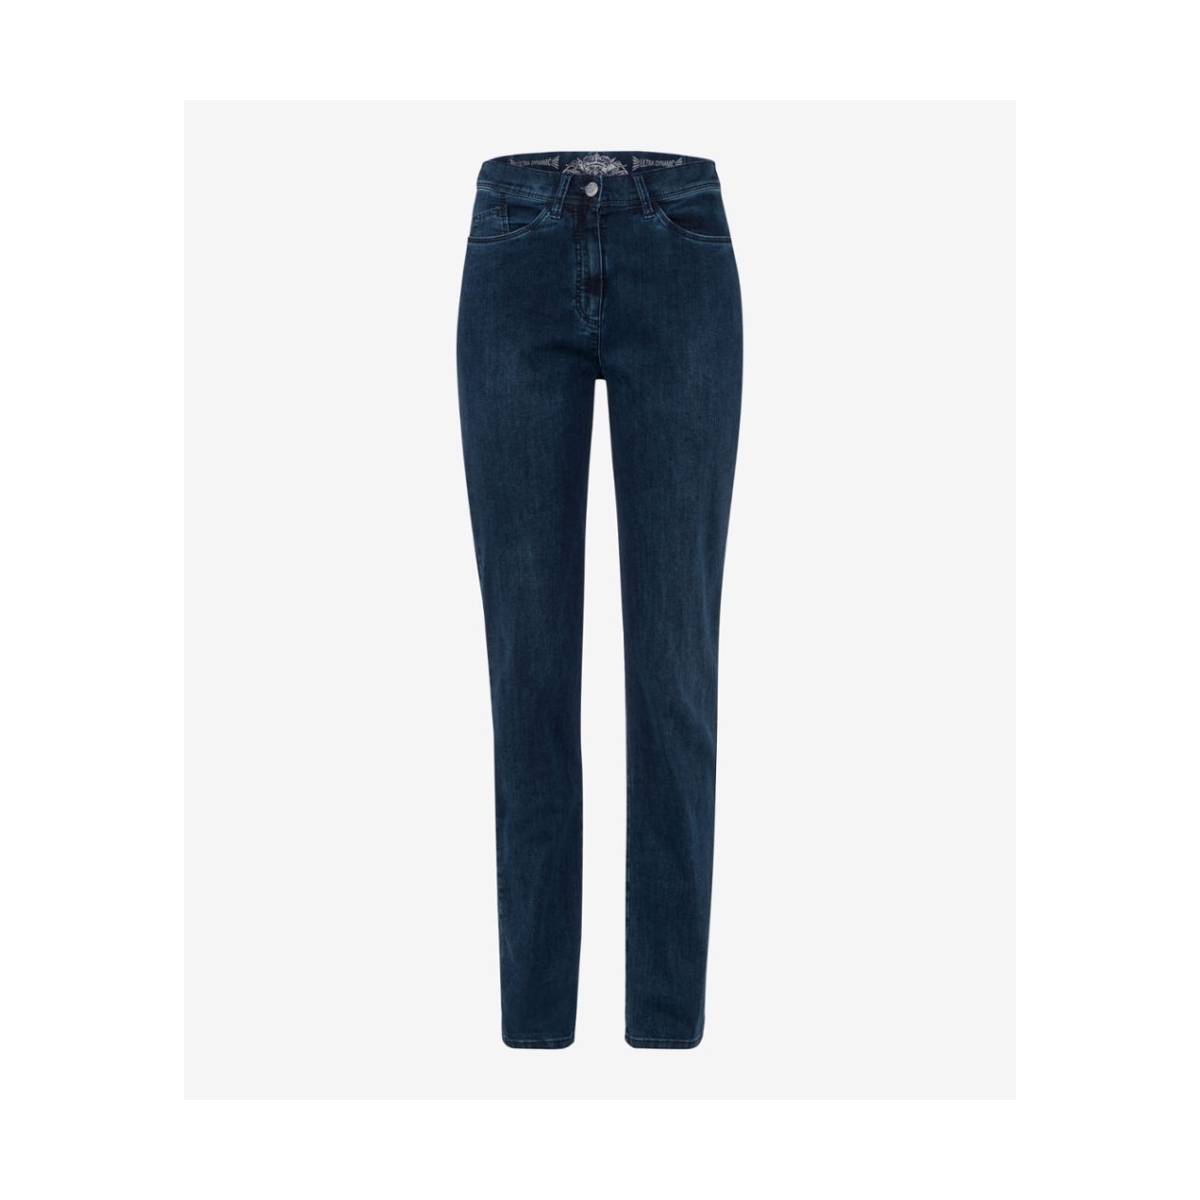 RAPHAELA  broeken lichte jeans -  model 10-6520 10910920 - Dameskleding broeken jeans